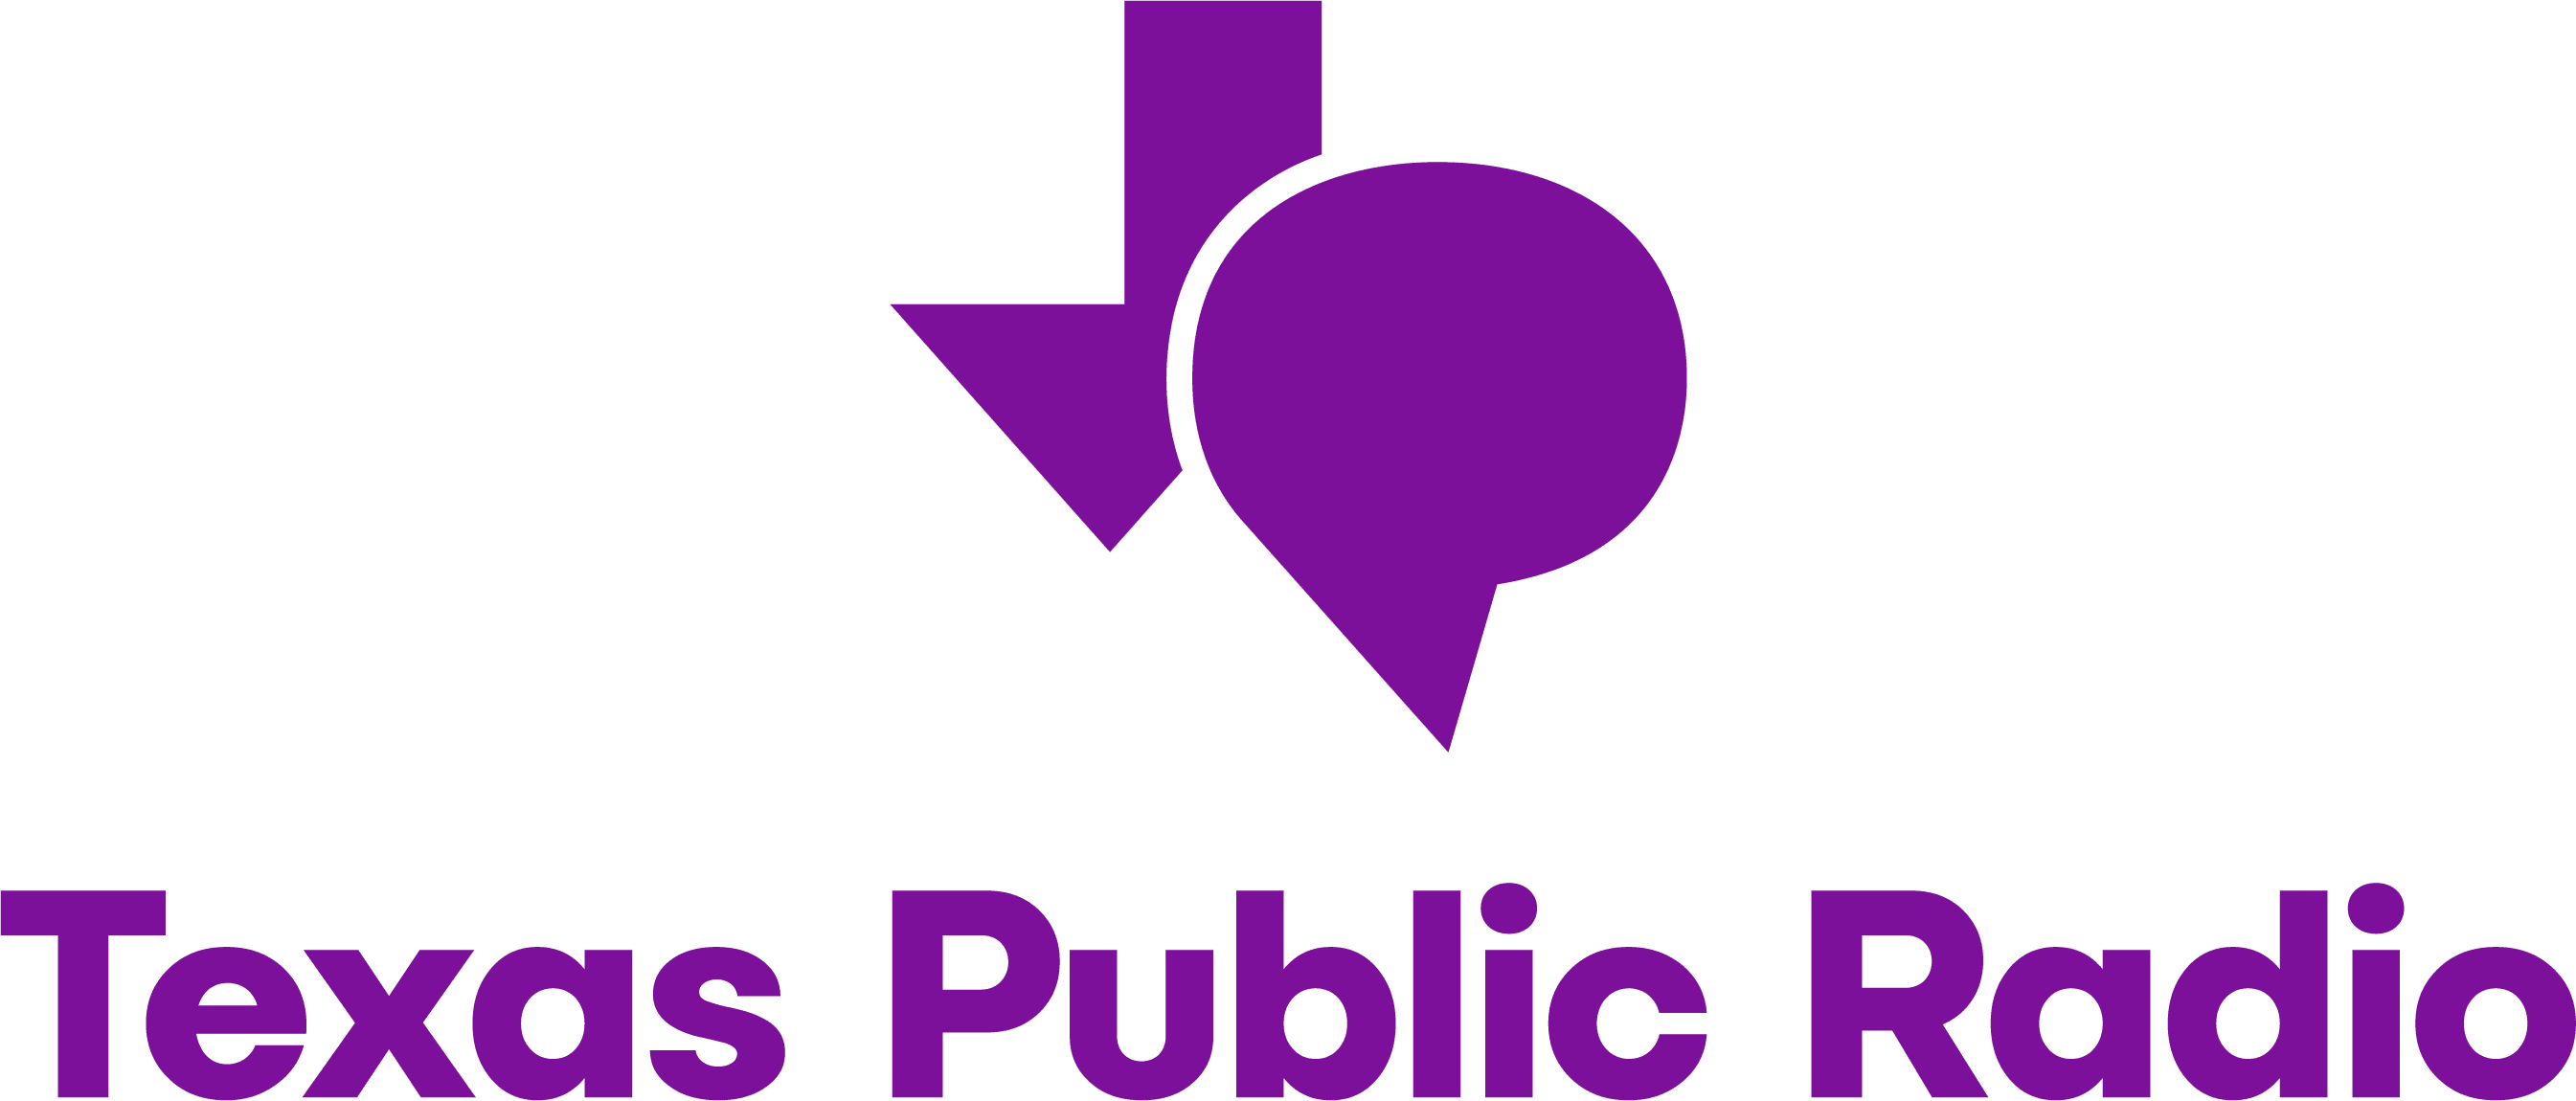 Texas Public Radio logo